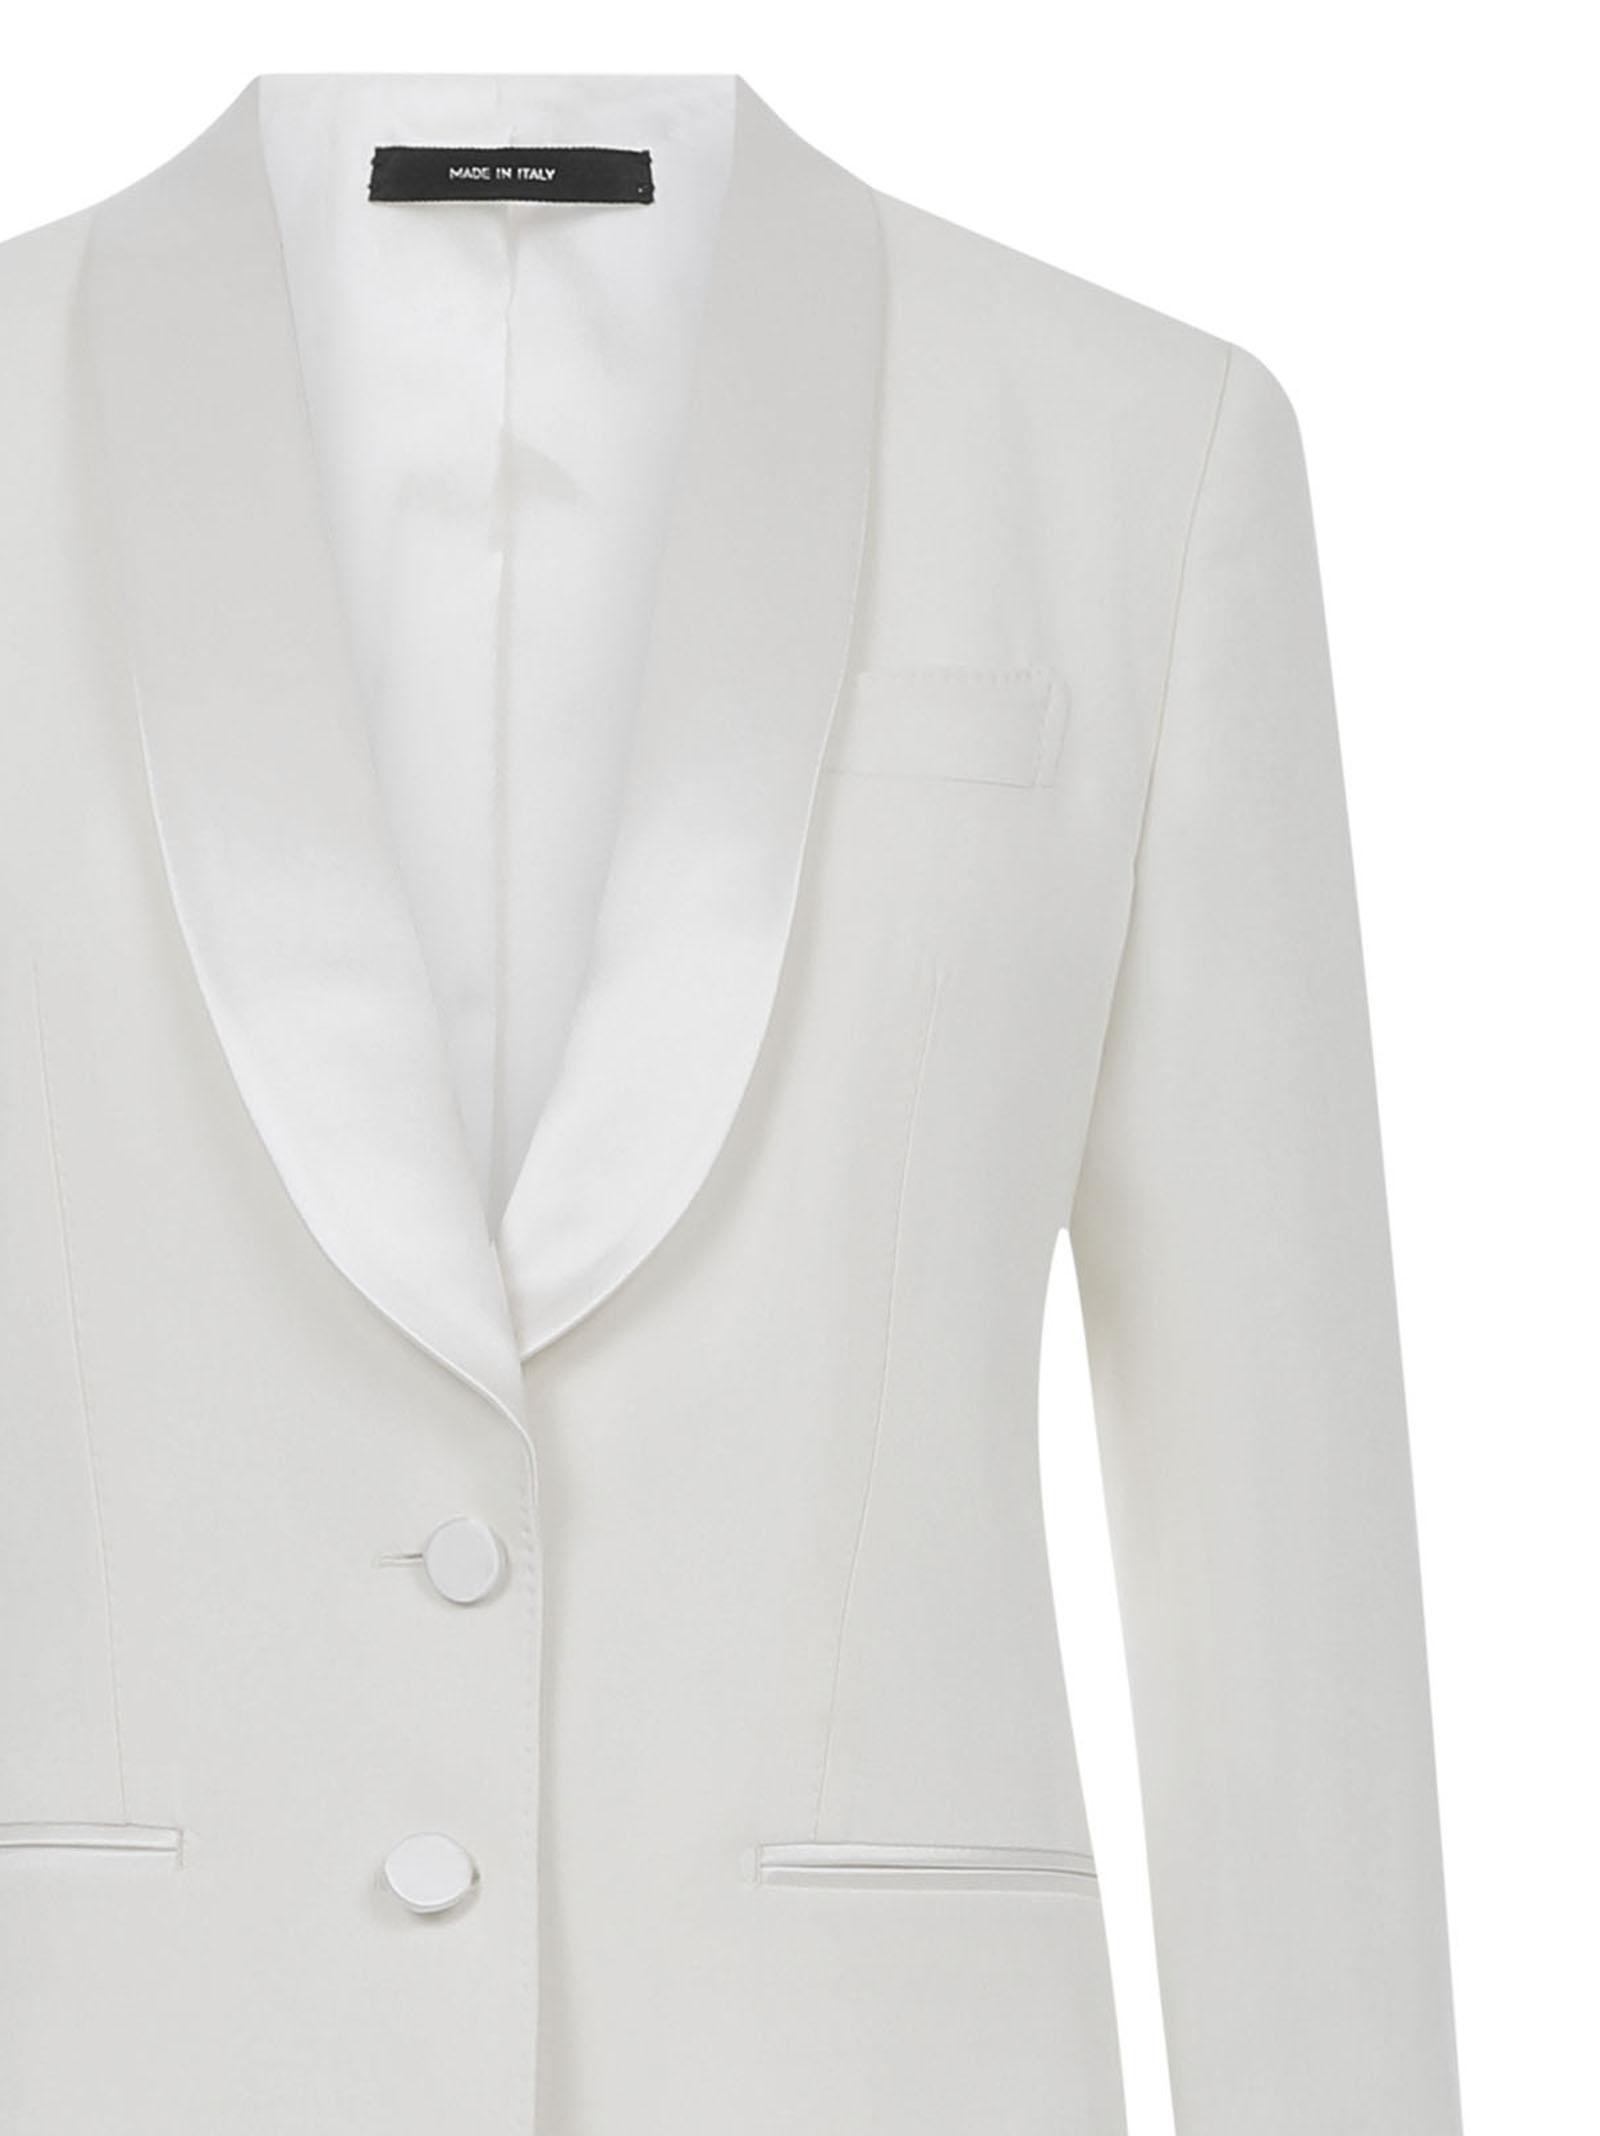 Tom Ford Tuxedo Suit in White | Lyst